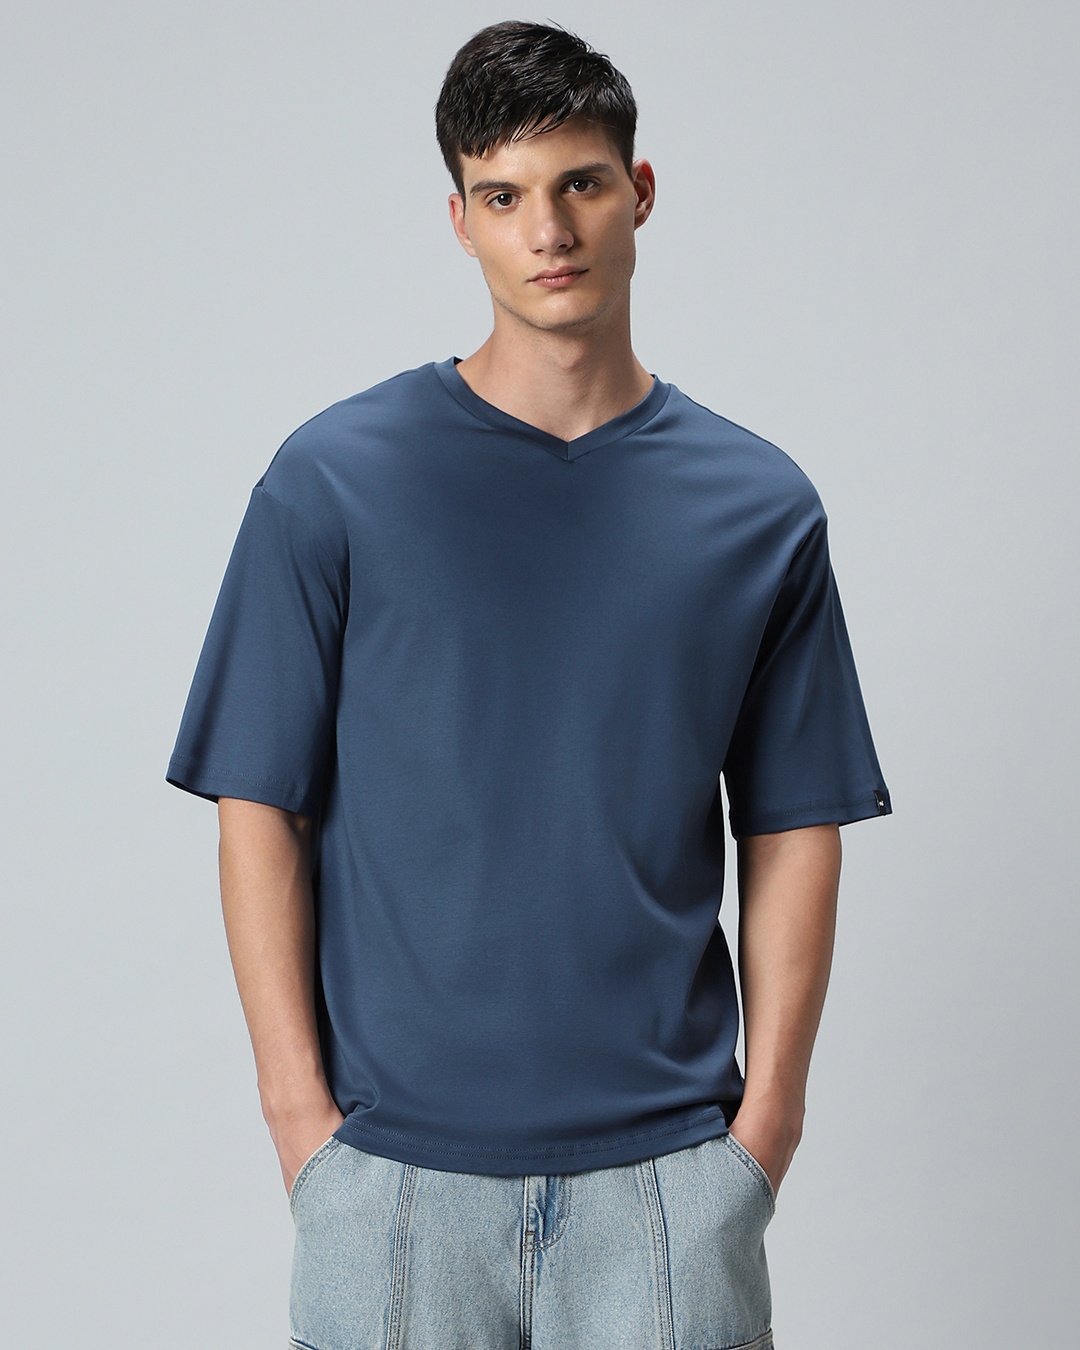 Buy Men's Blue Oversized T-shirt Online at Bewakoof